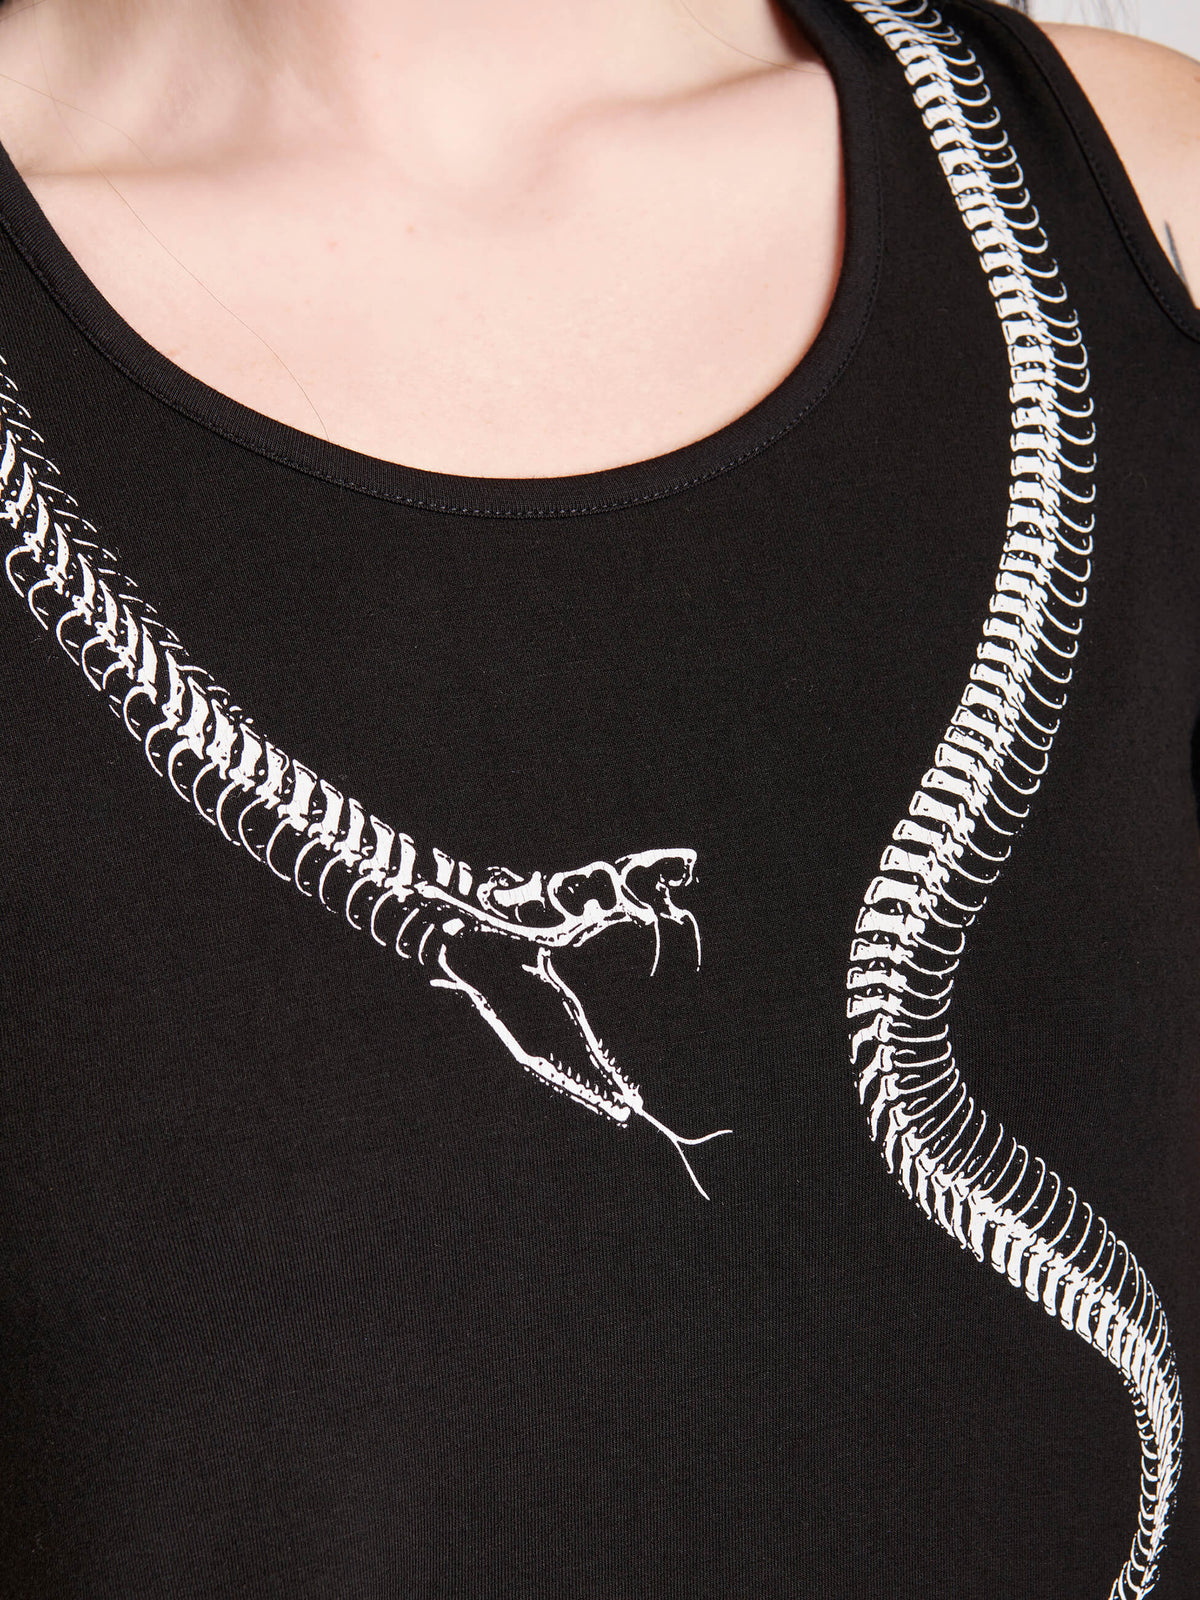 Black dress with skeleton snake art around the neckline